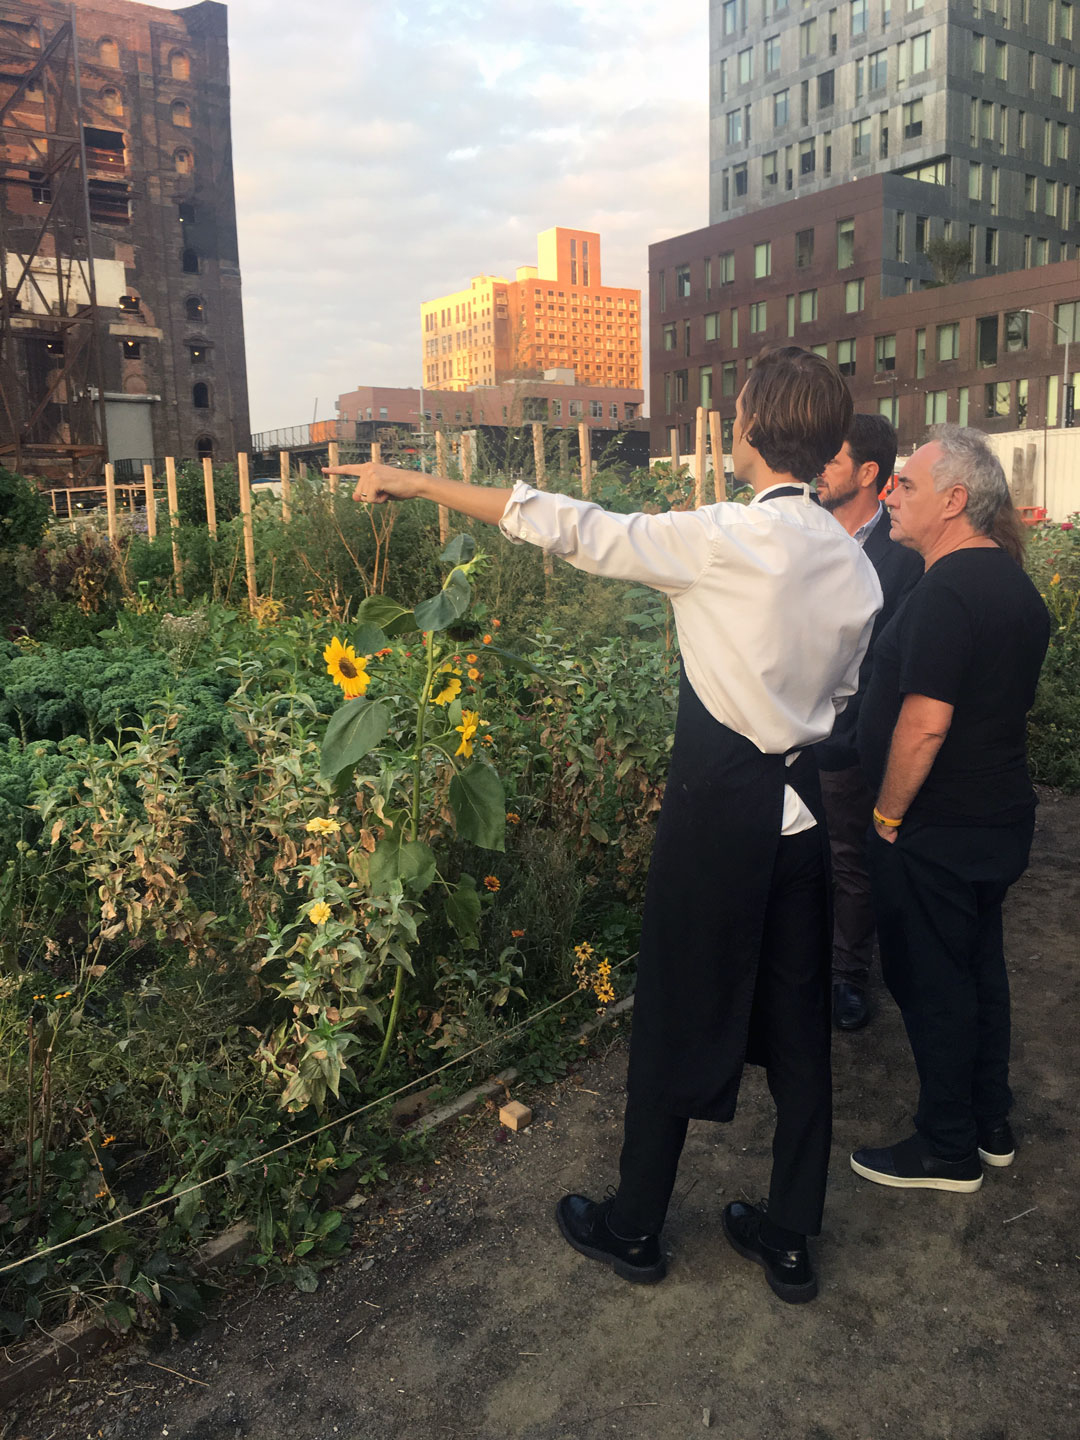 Ferran Adrià and Fredrik Berselius in Berselius’ kitchen garden plot at North Brooklyn Farms